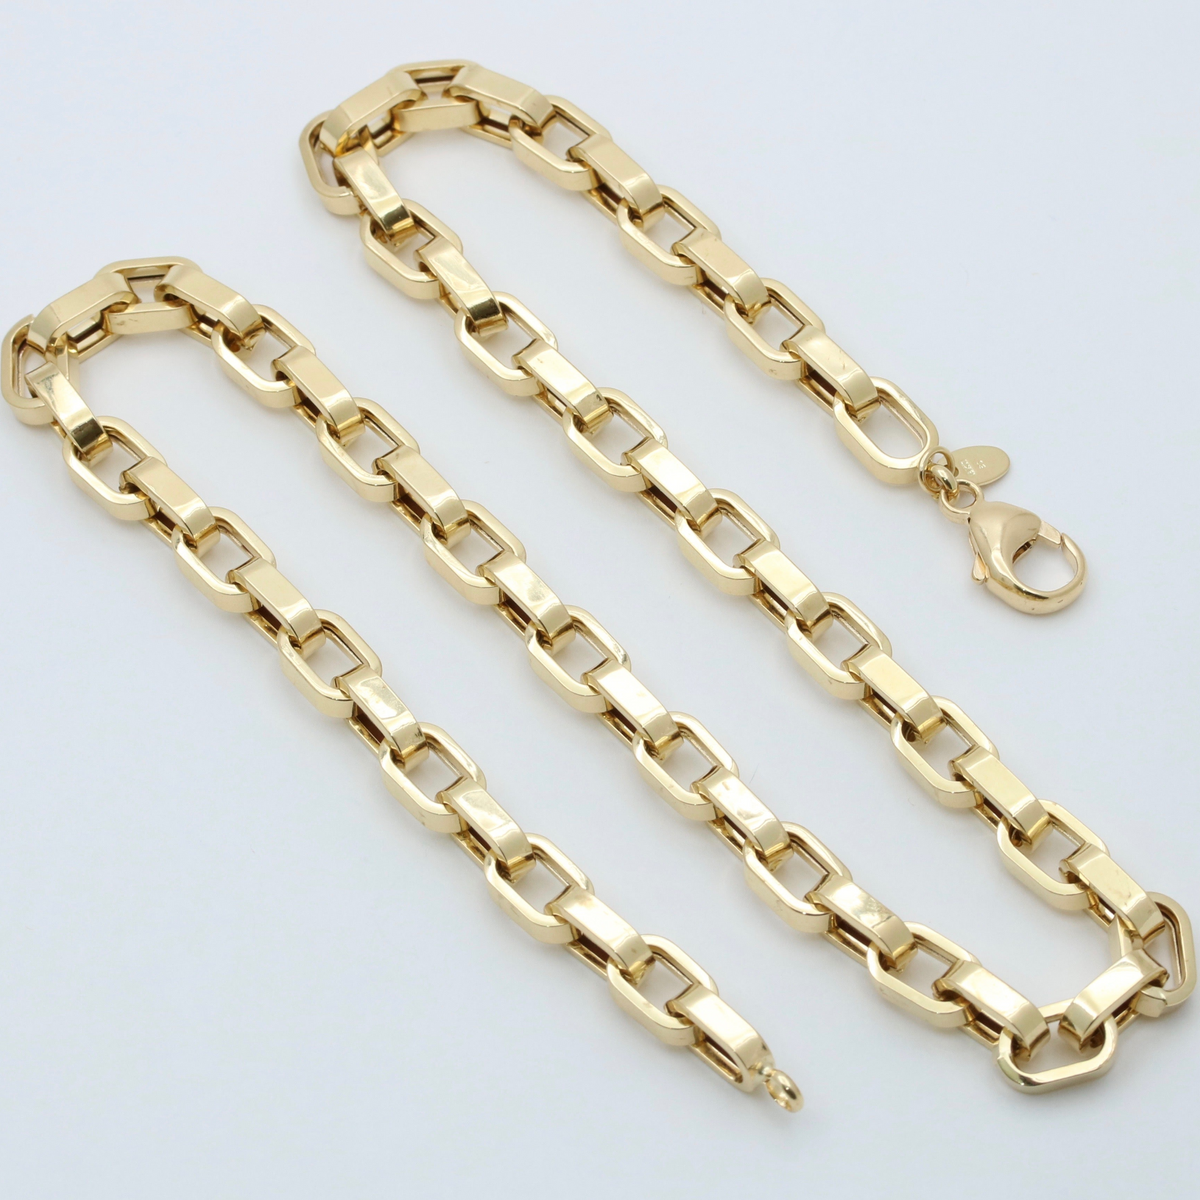 18K Gold Biker Link Chain, 18” Long